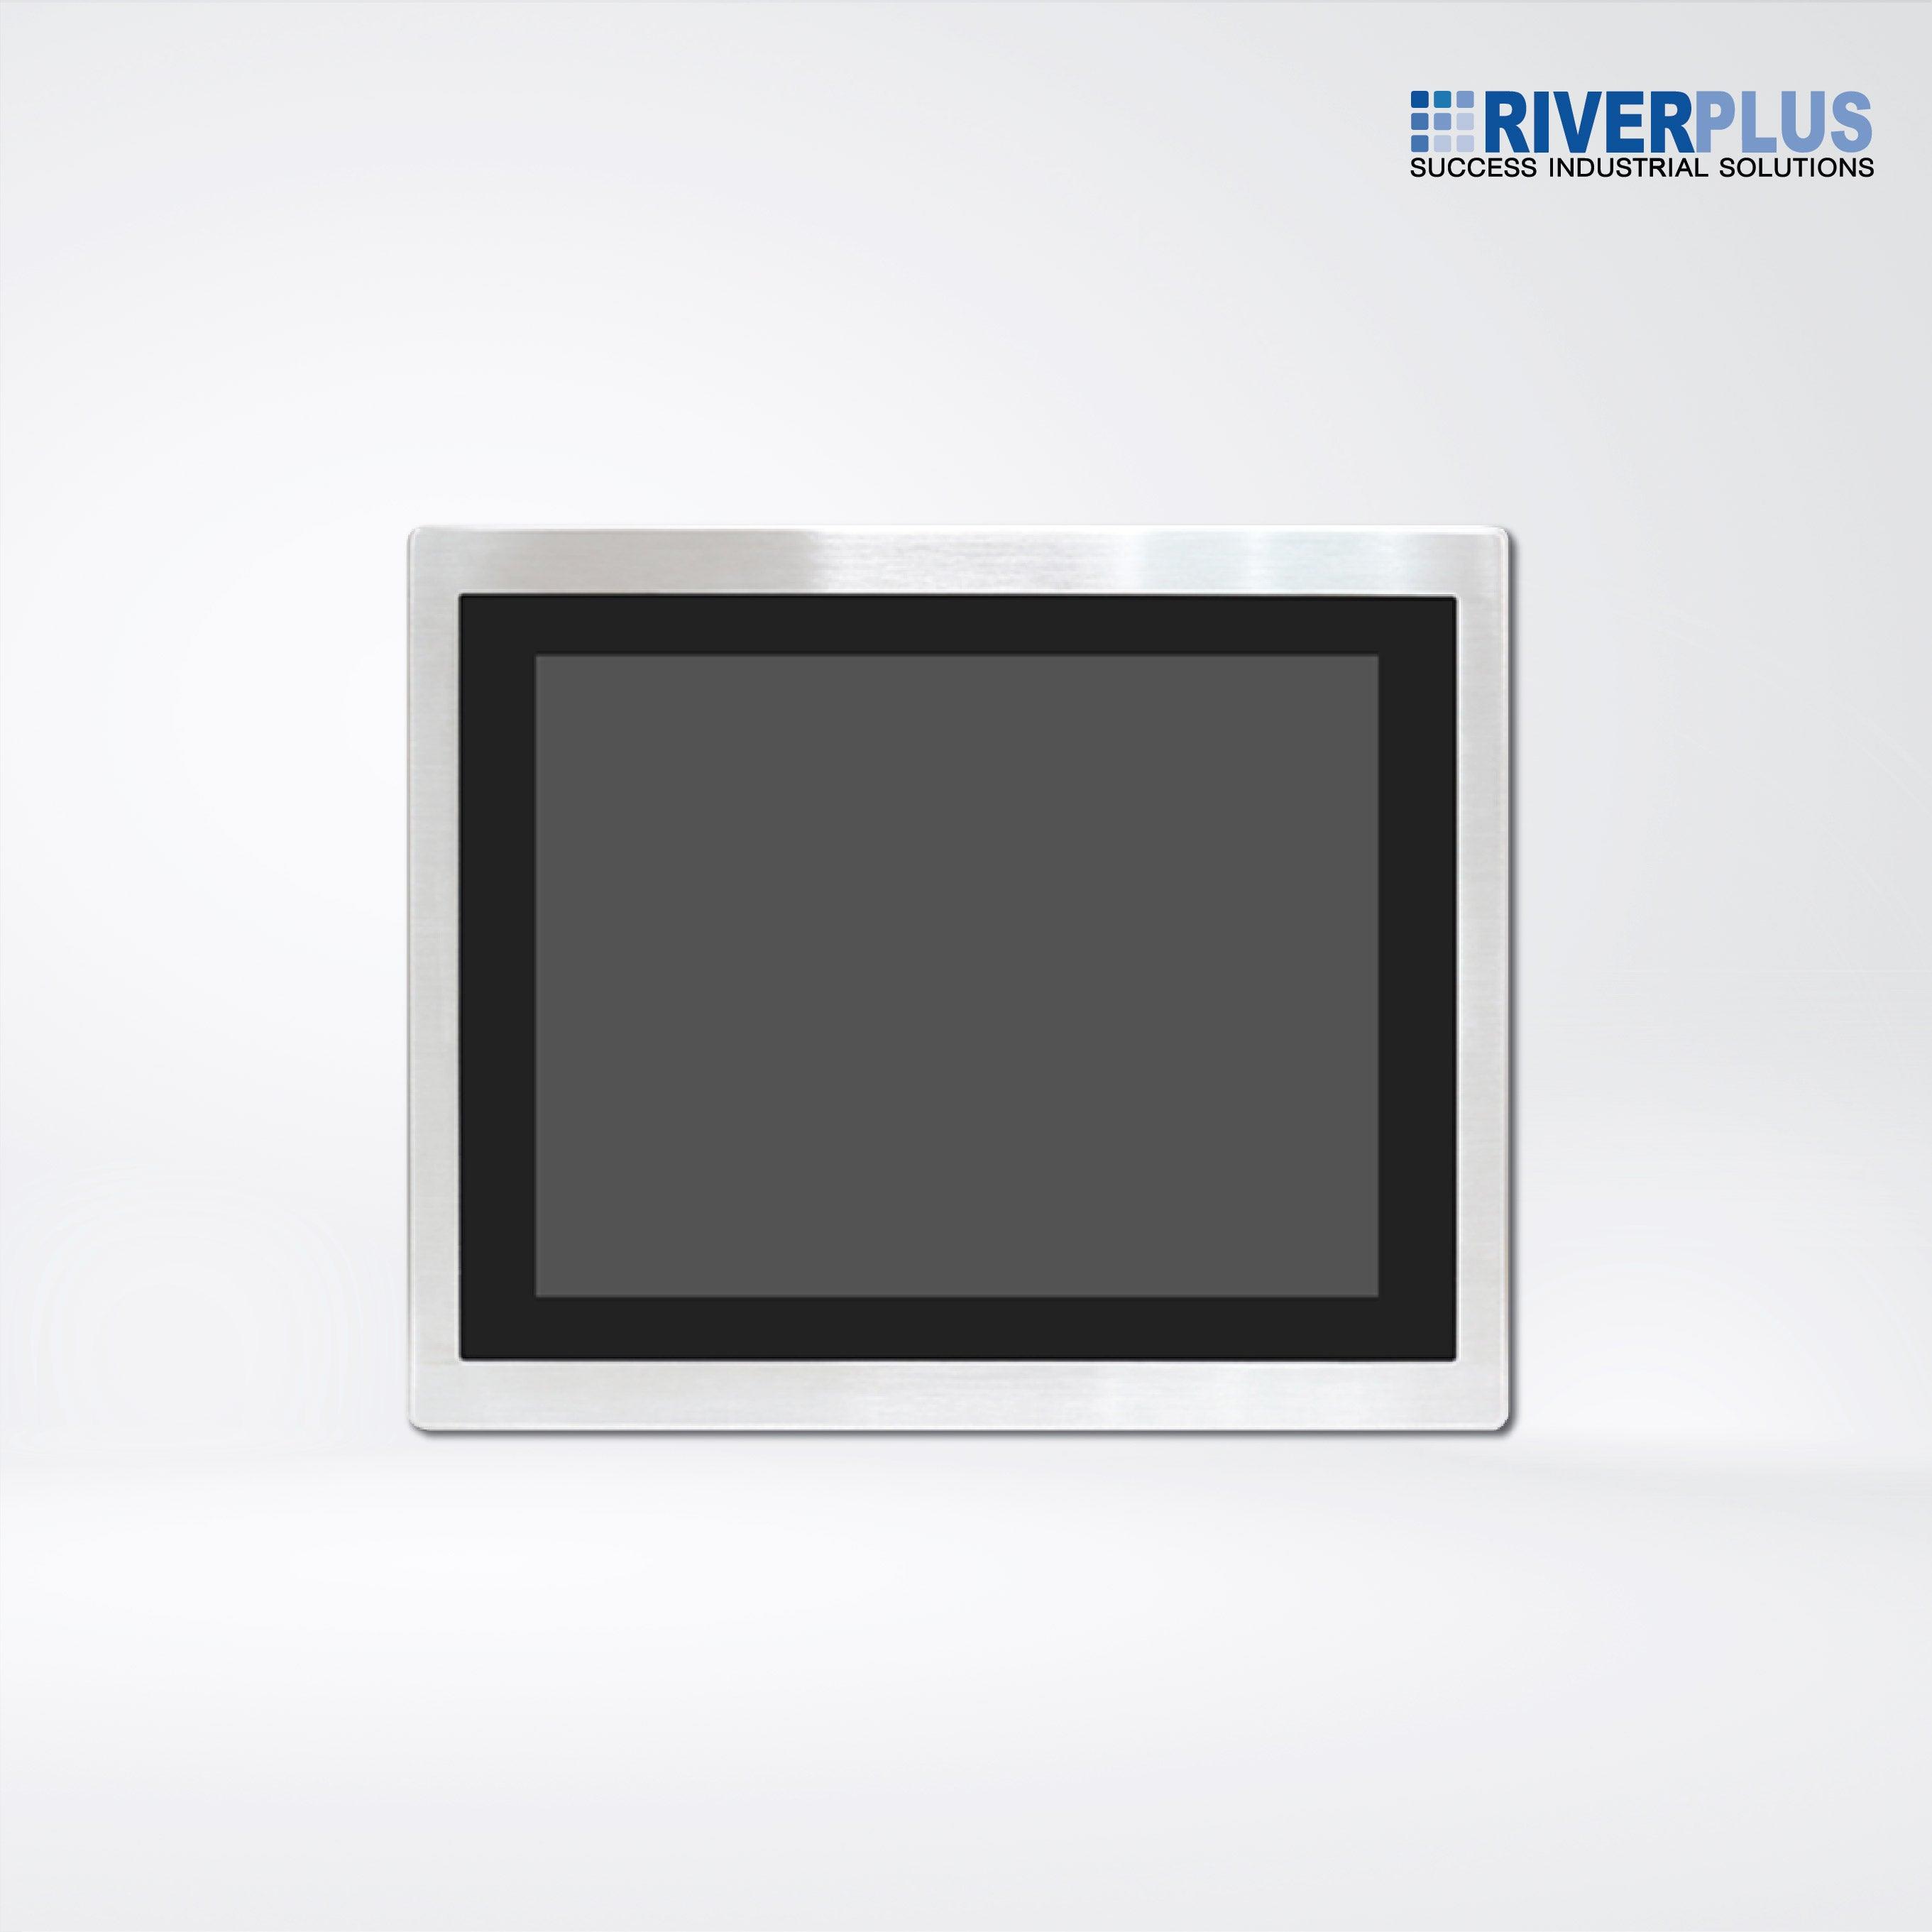 AEx-815P 15″ Intel Celeron N2930 IP66 Stainless Steel Panel PC, Luminance : 450 (cd/m²) - Riverplus